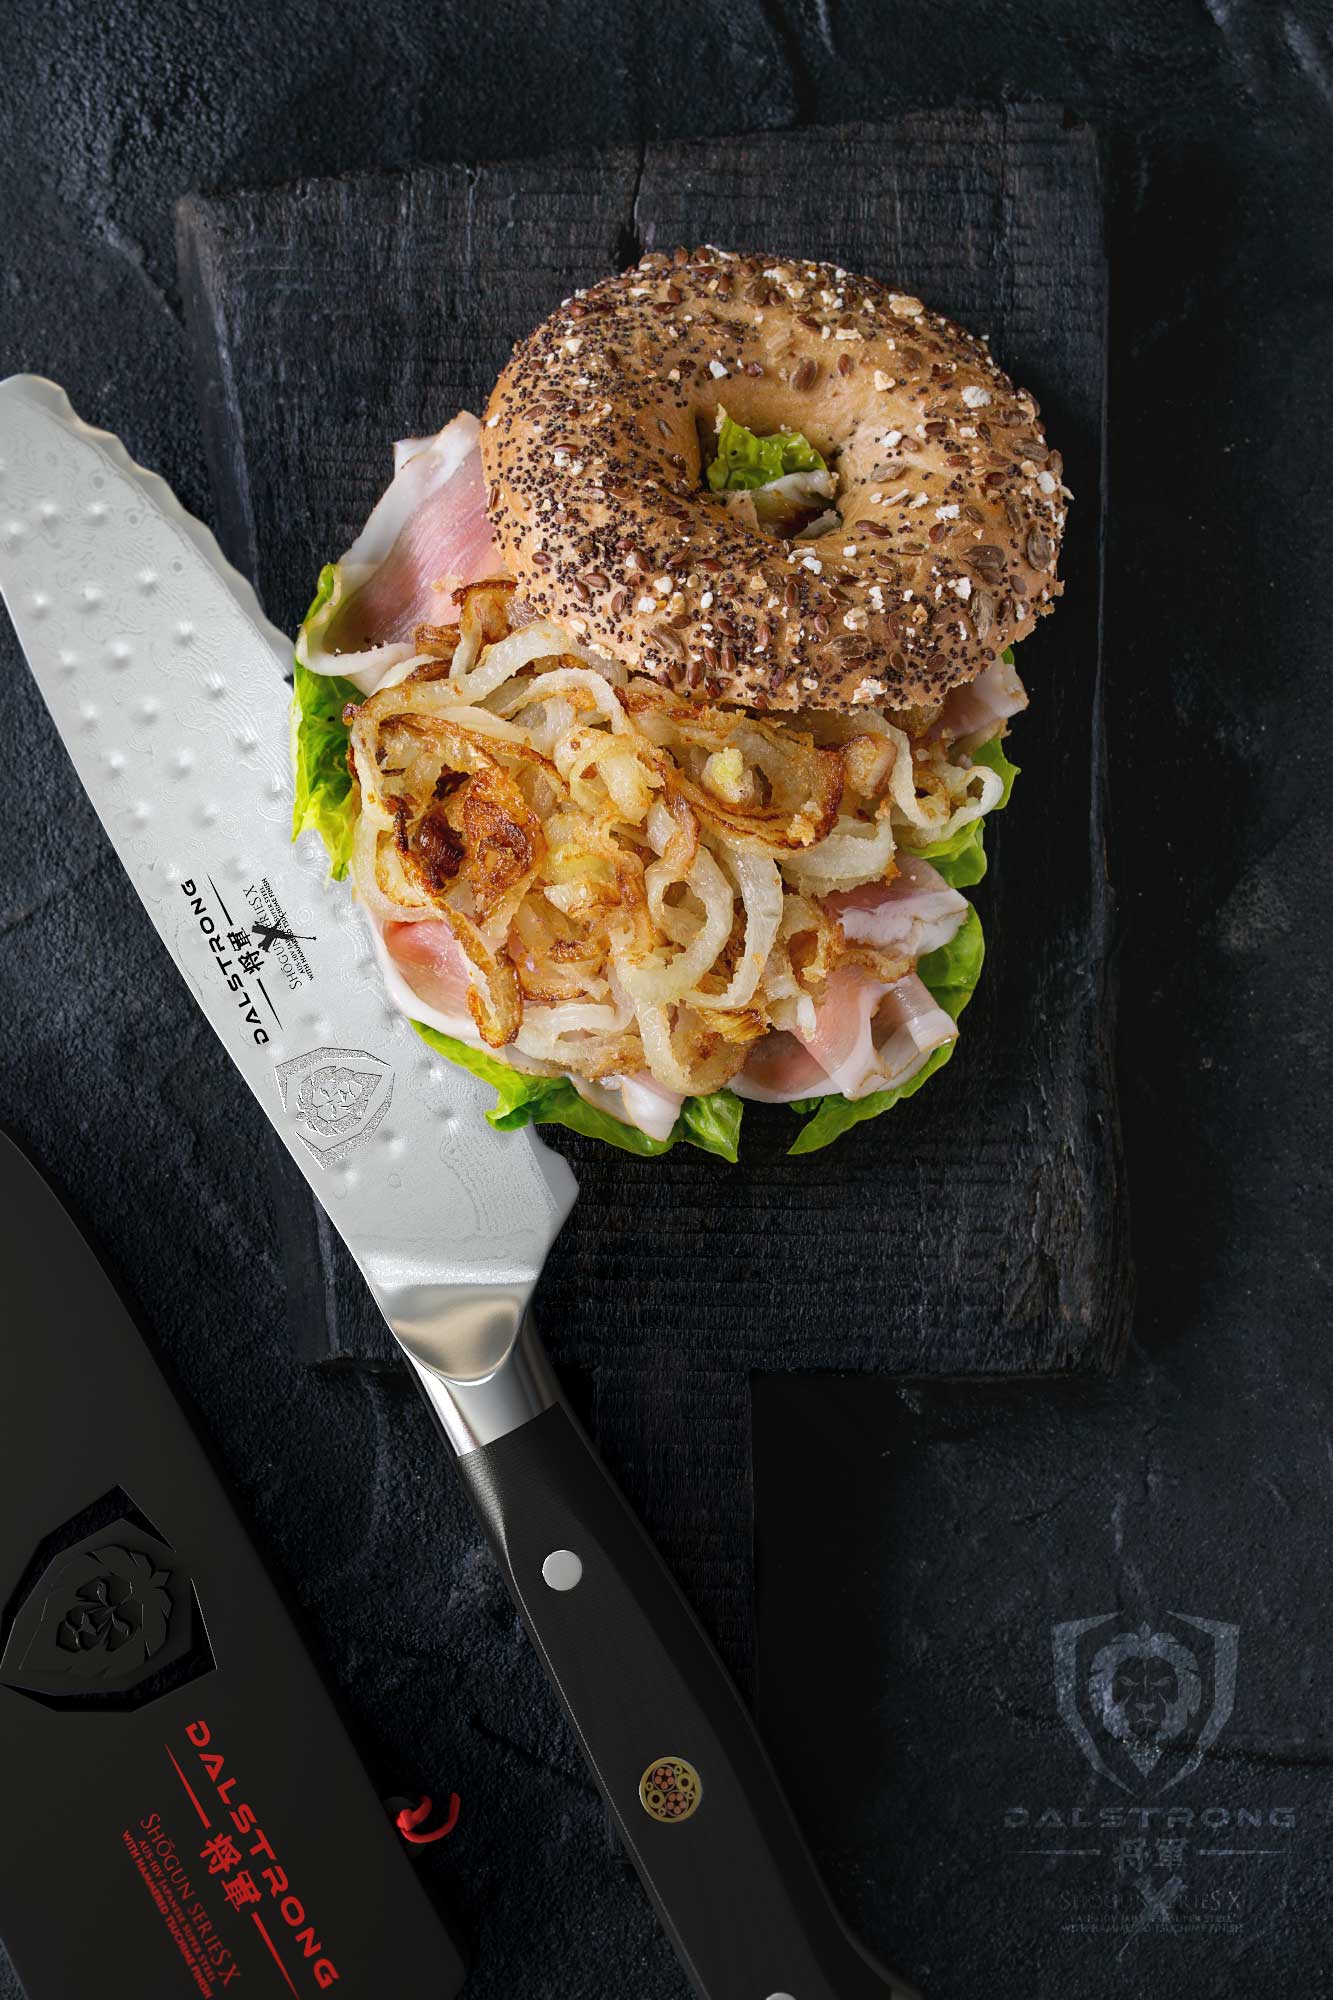 Ultimate Utility & Sandwich Knife 6" | Shogun Series X | Dalstrong ©